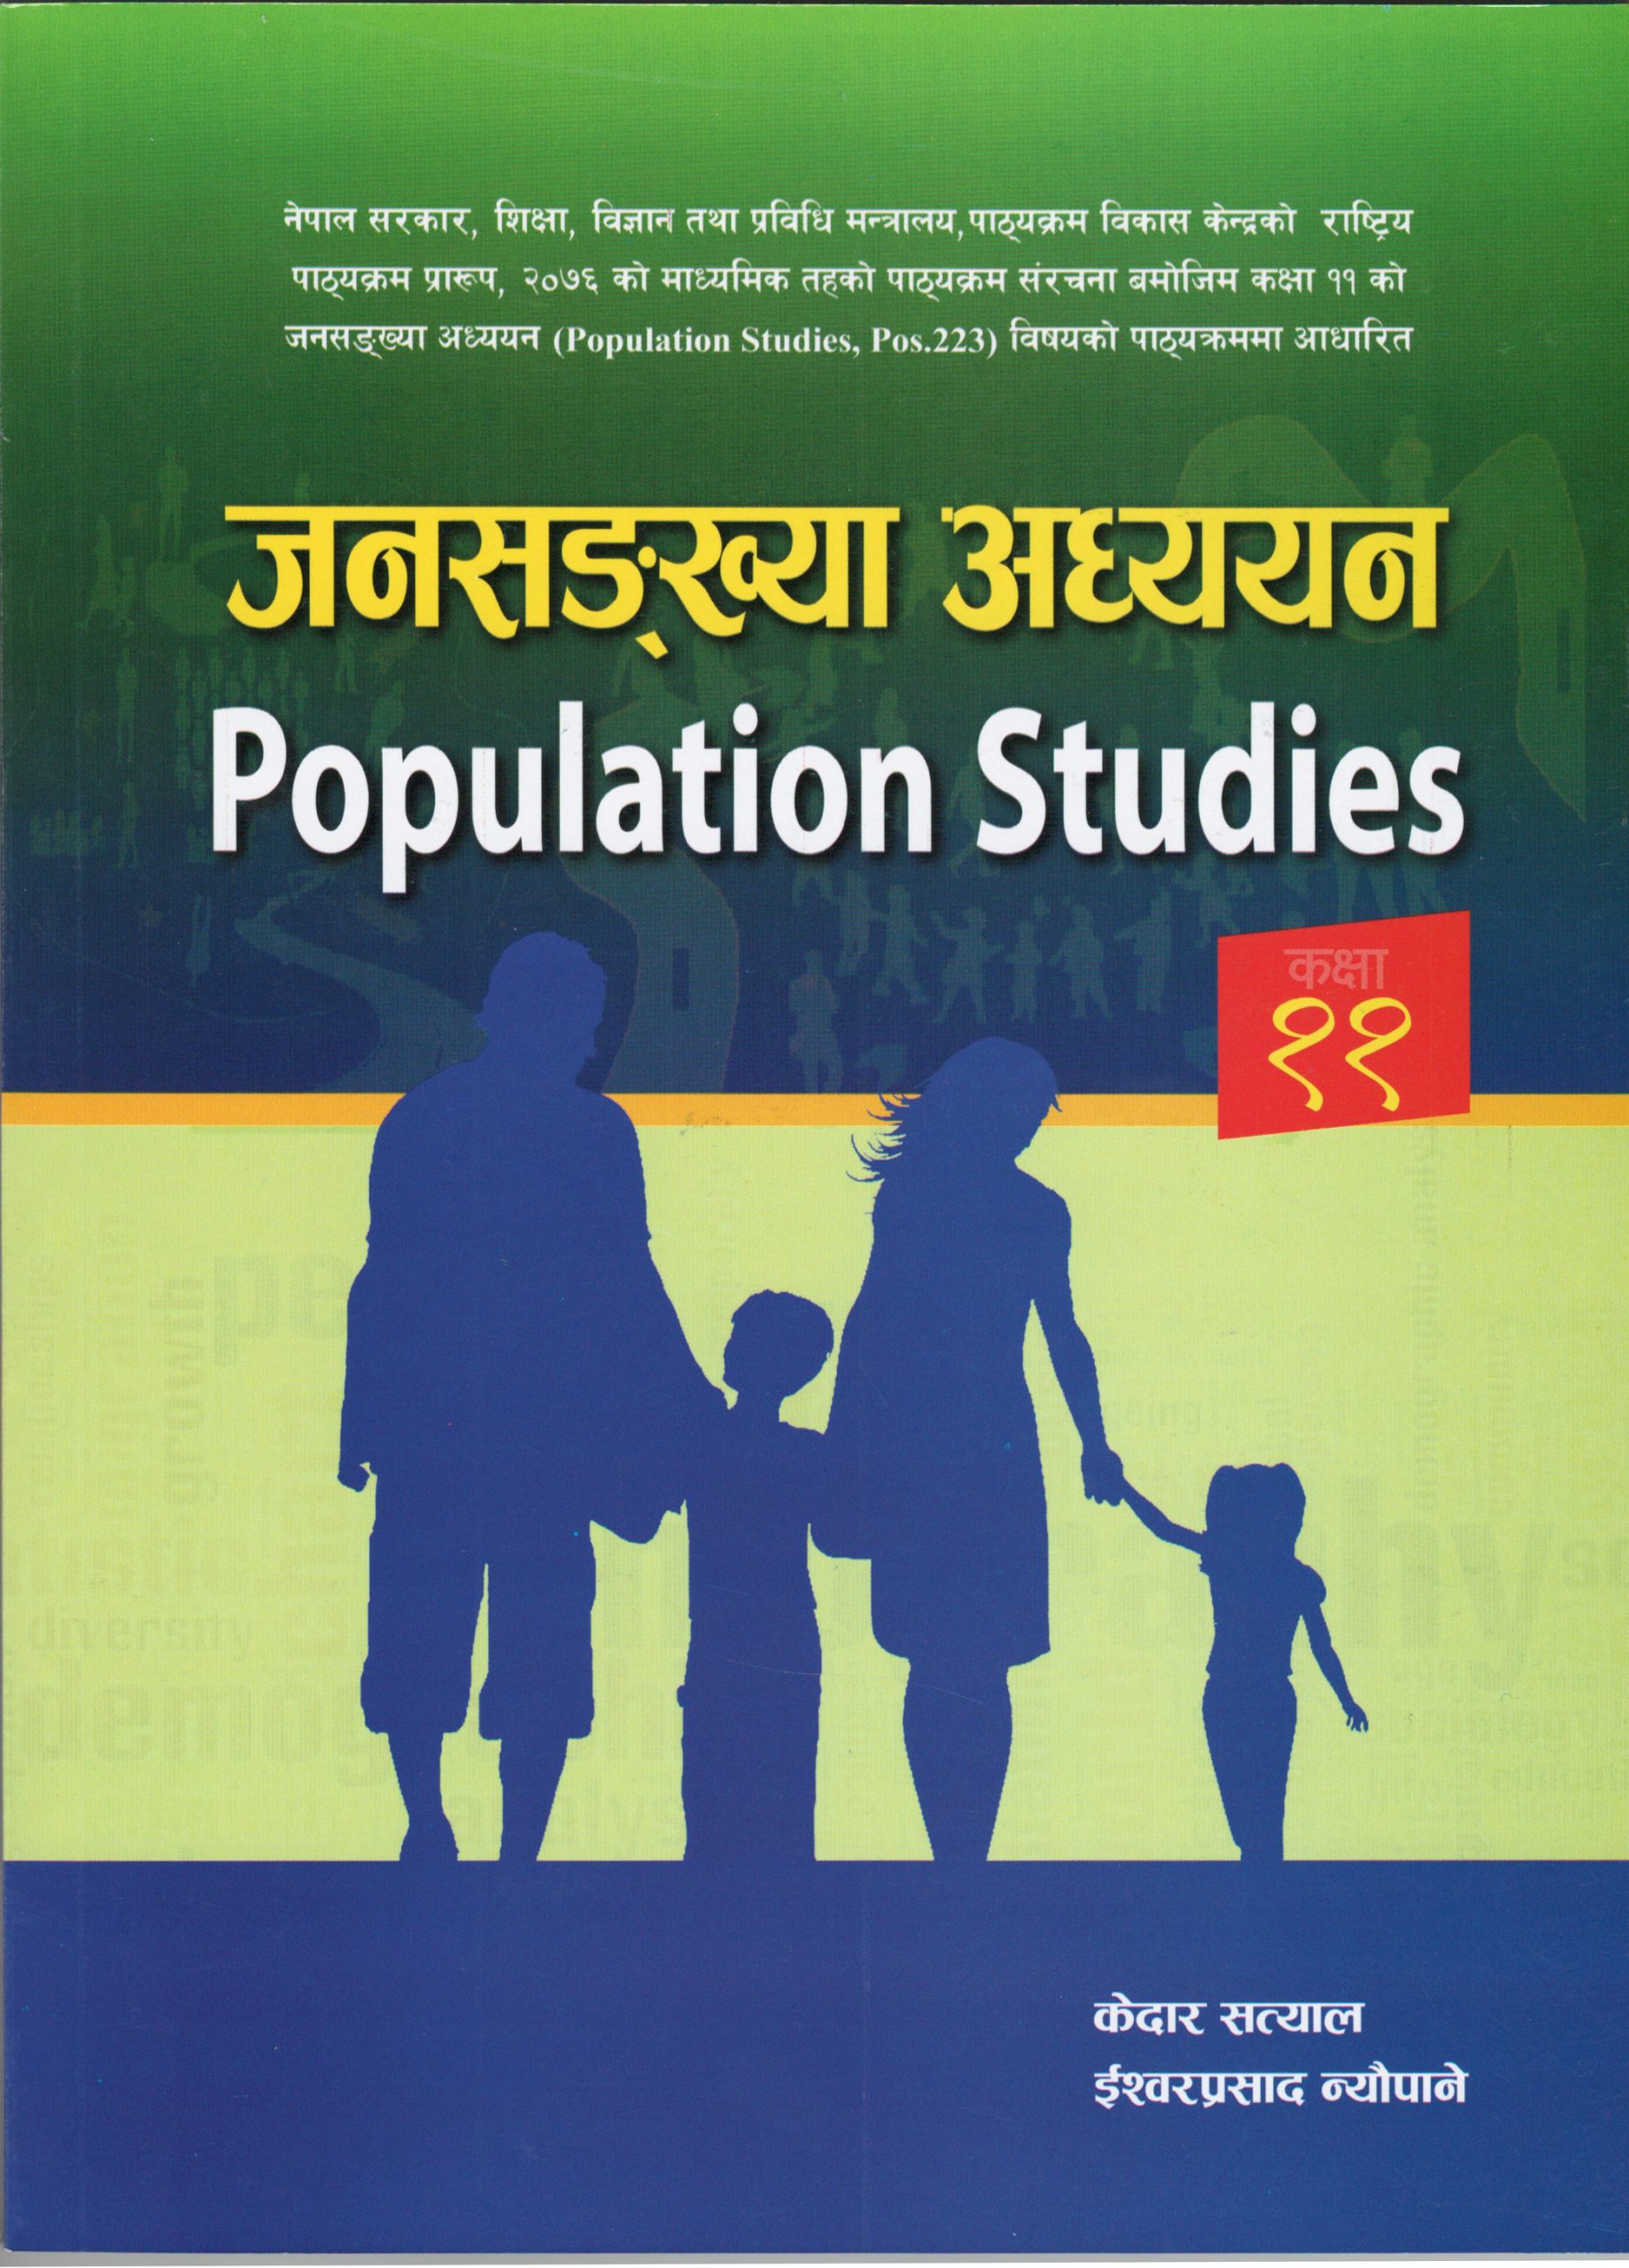 Population Studies For Grade – 11 I जनसङ्ख्या अध्ययन कक्षा ११